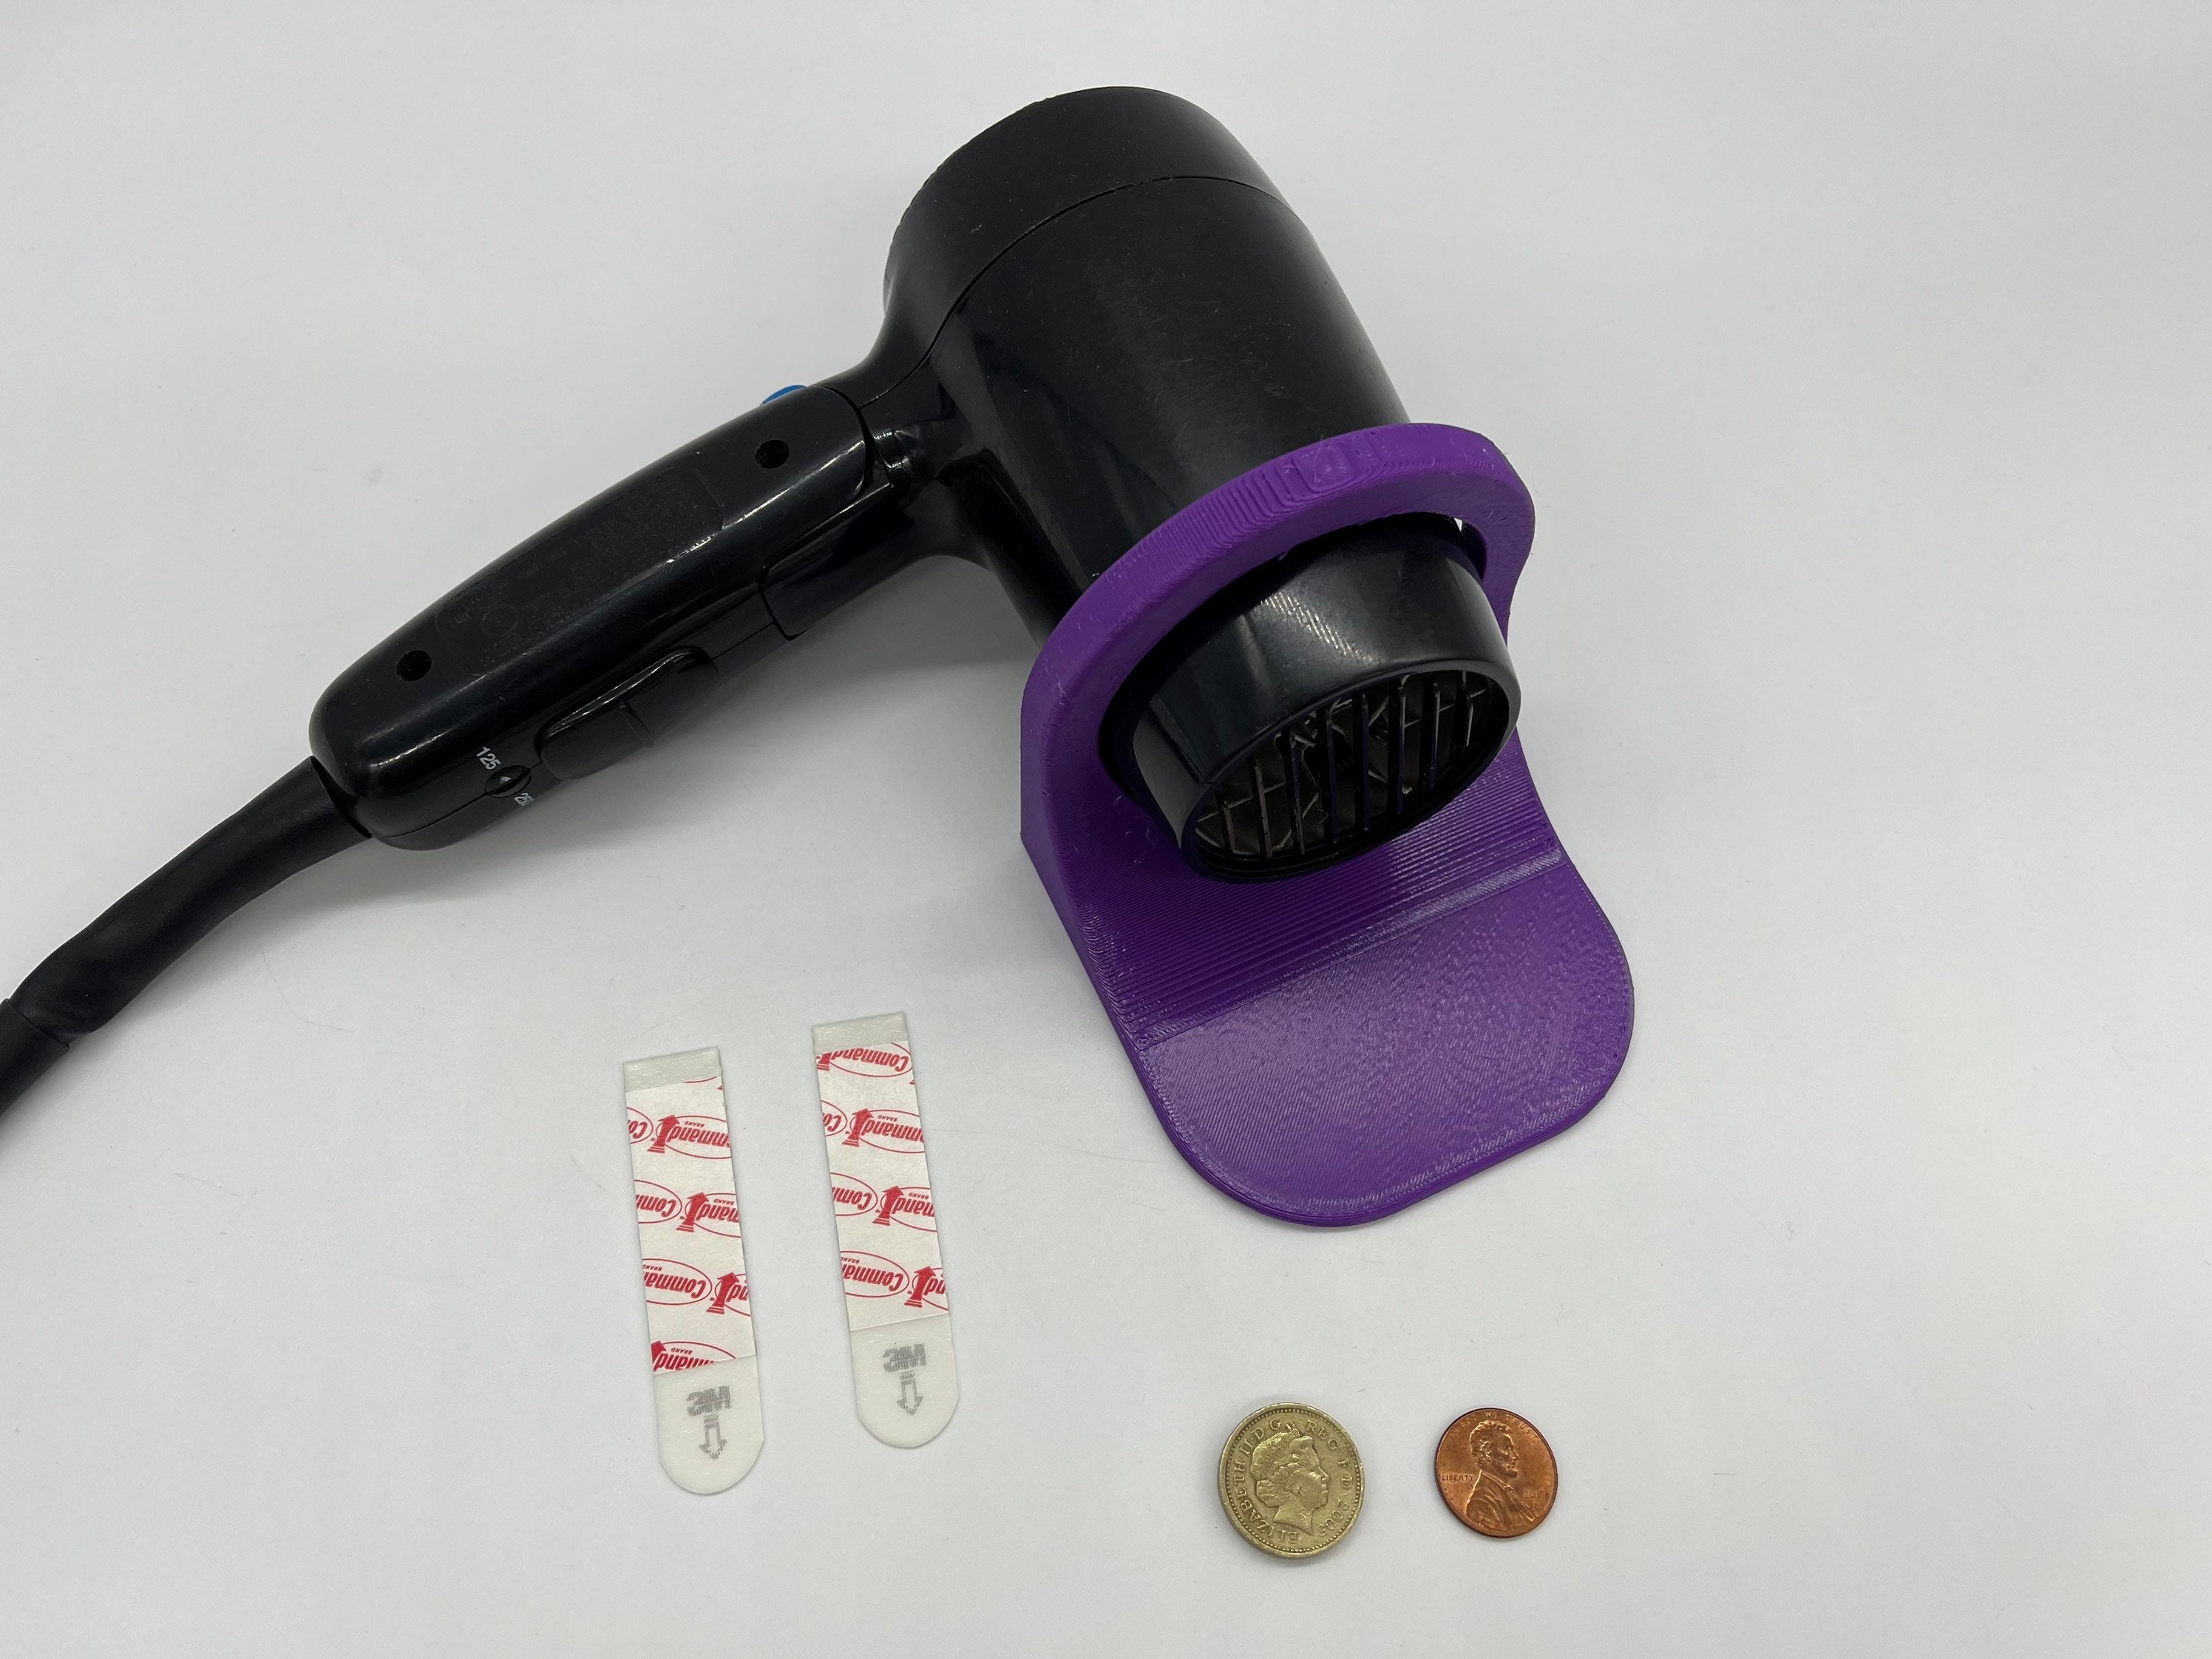 BaBylissPRO Tourmaline  Titanium Micro Travel Hairdryer with folding handle